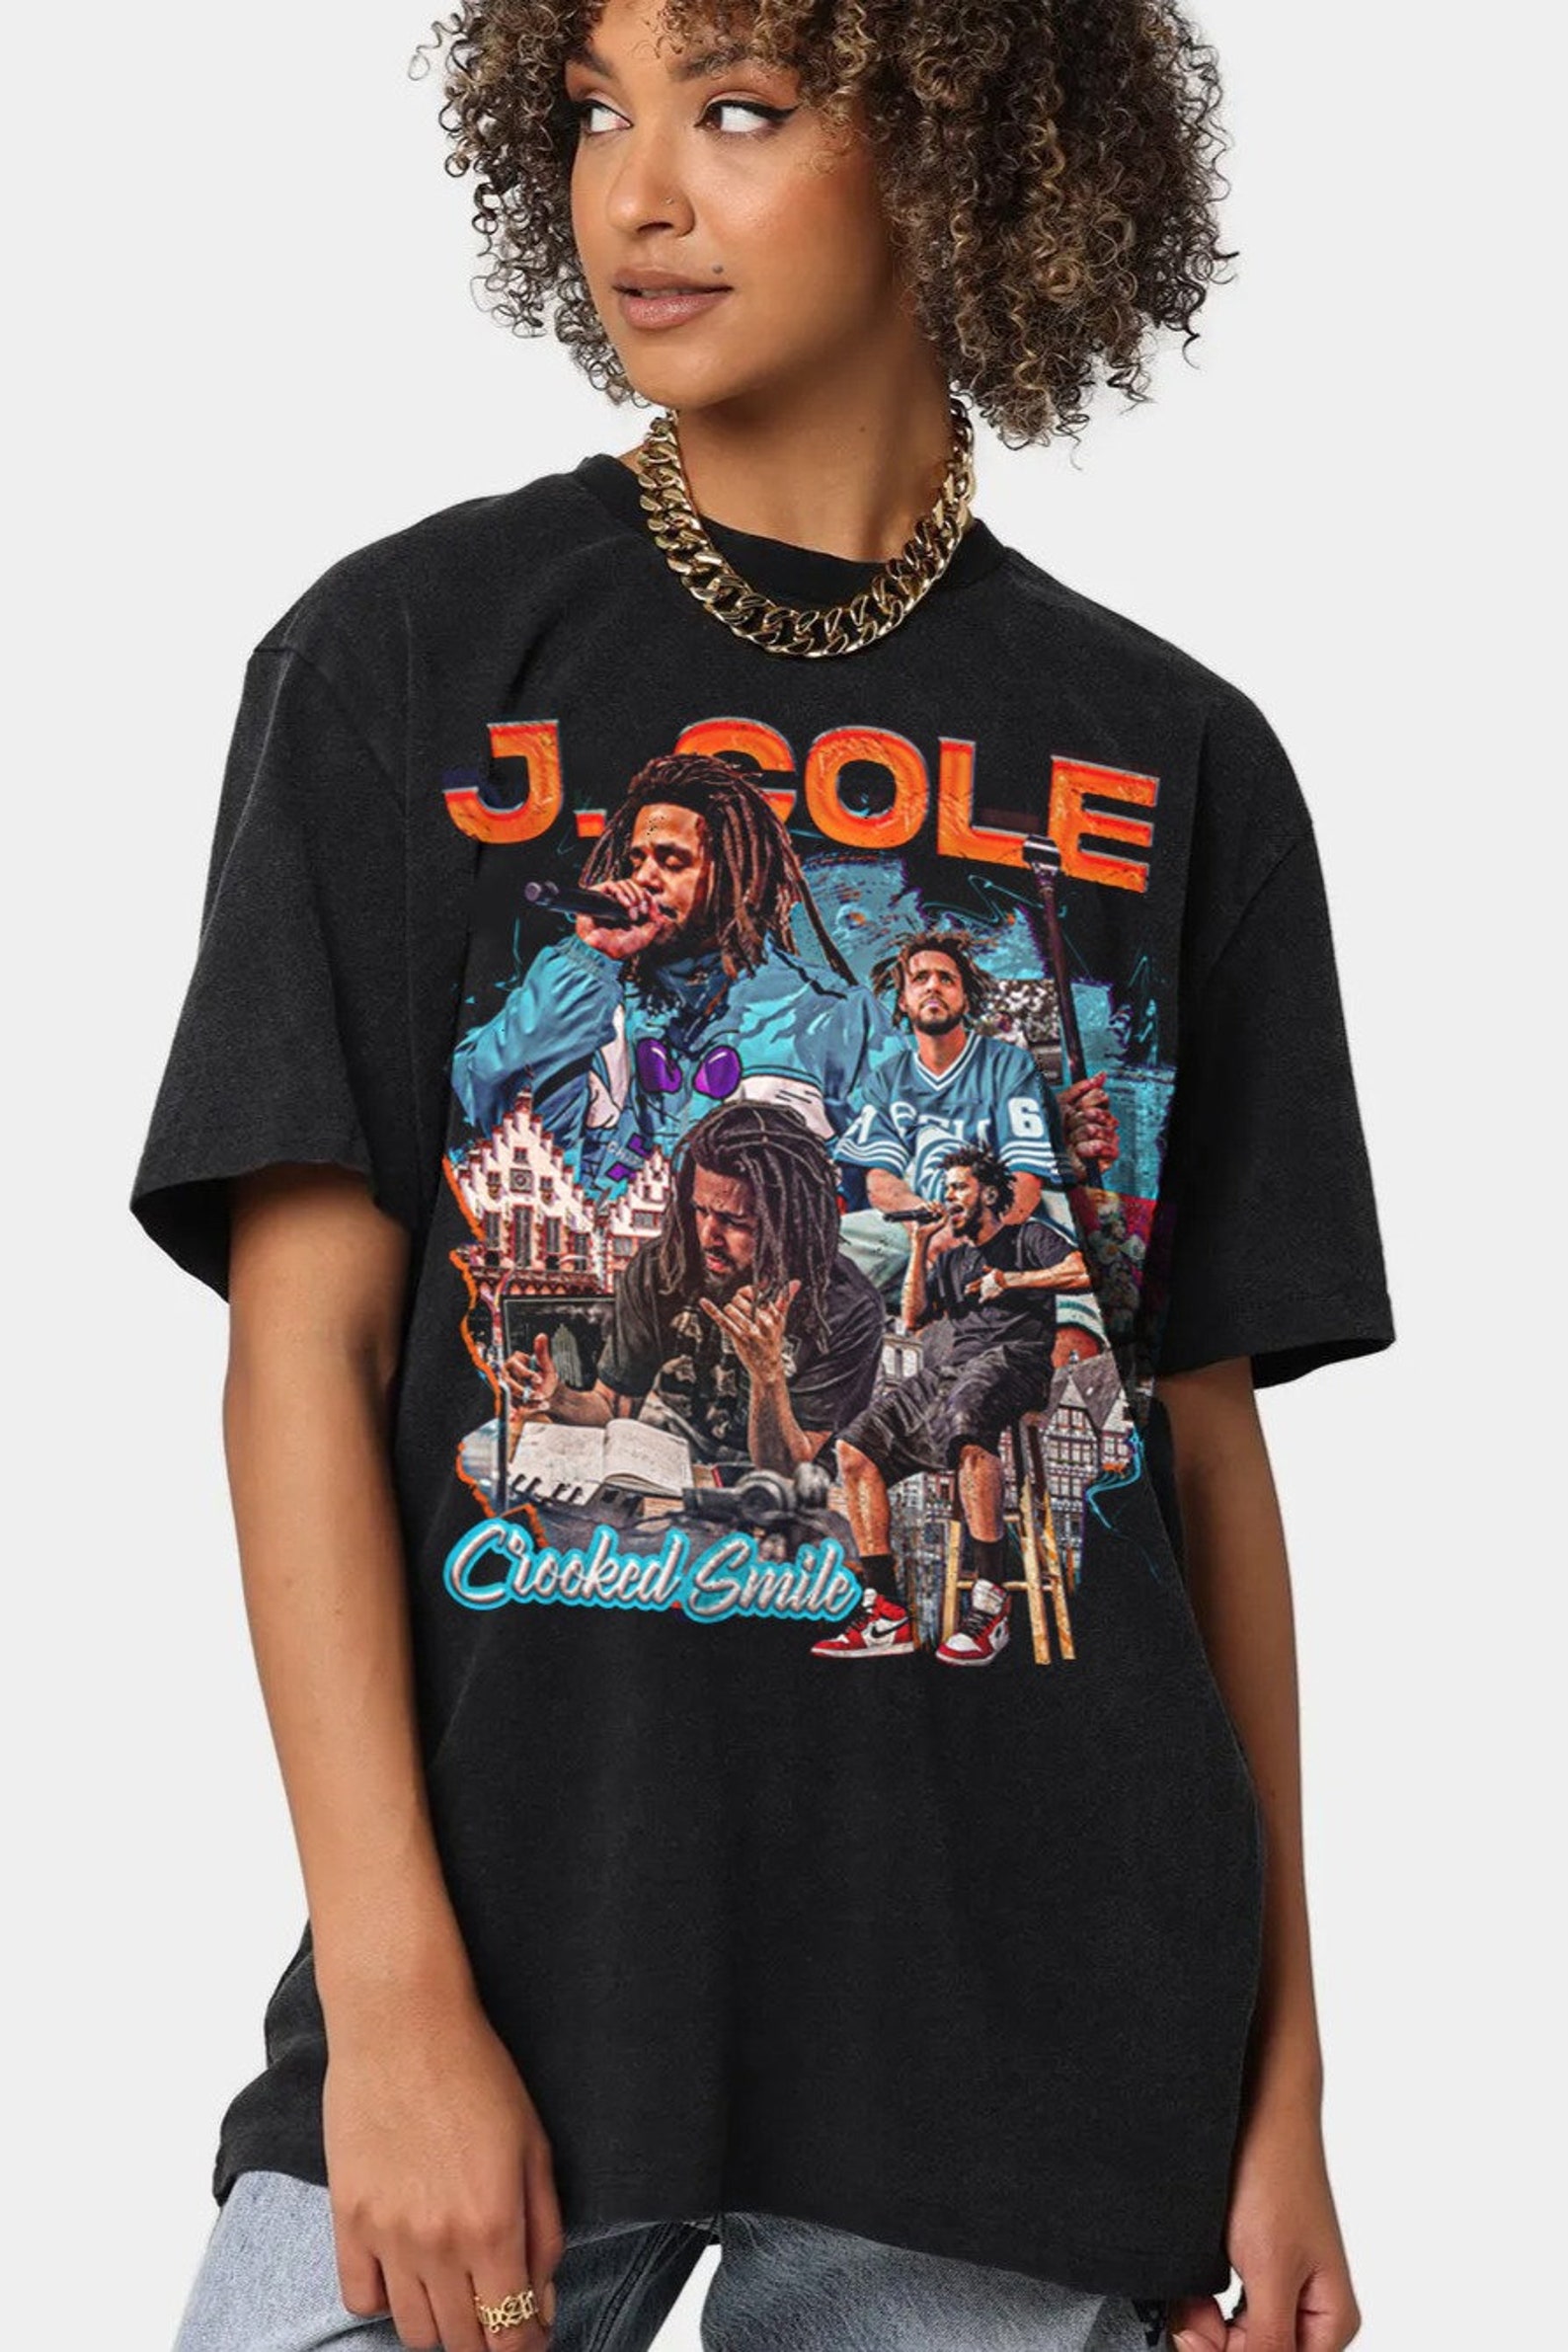 Vintage J Cole Shirt Rapper Shirt bootleg raptees 90s shirt | Etsy